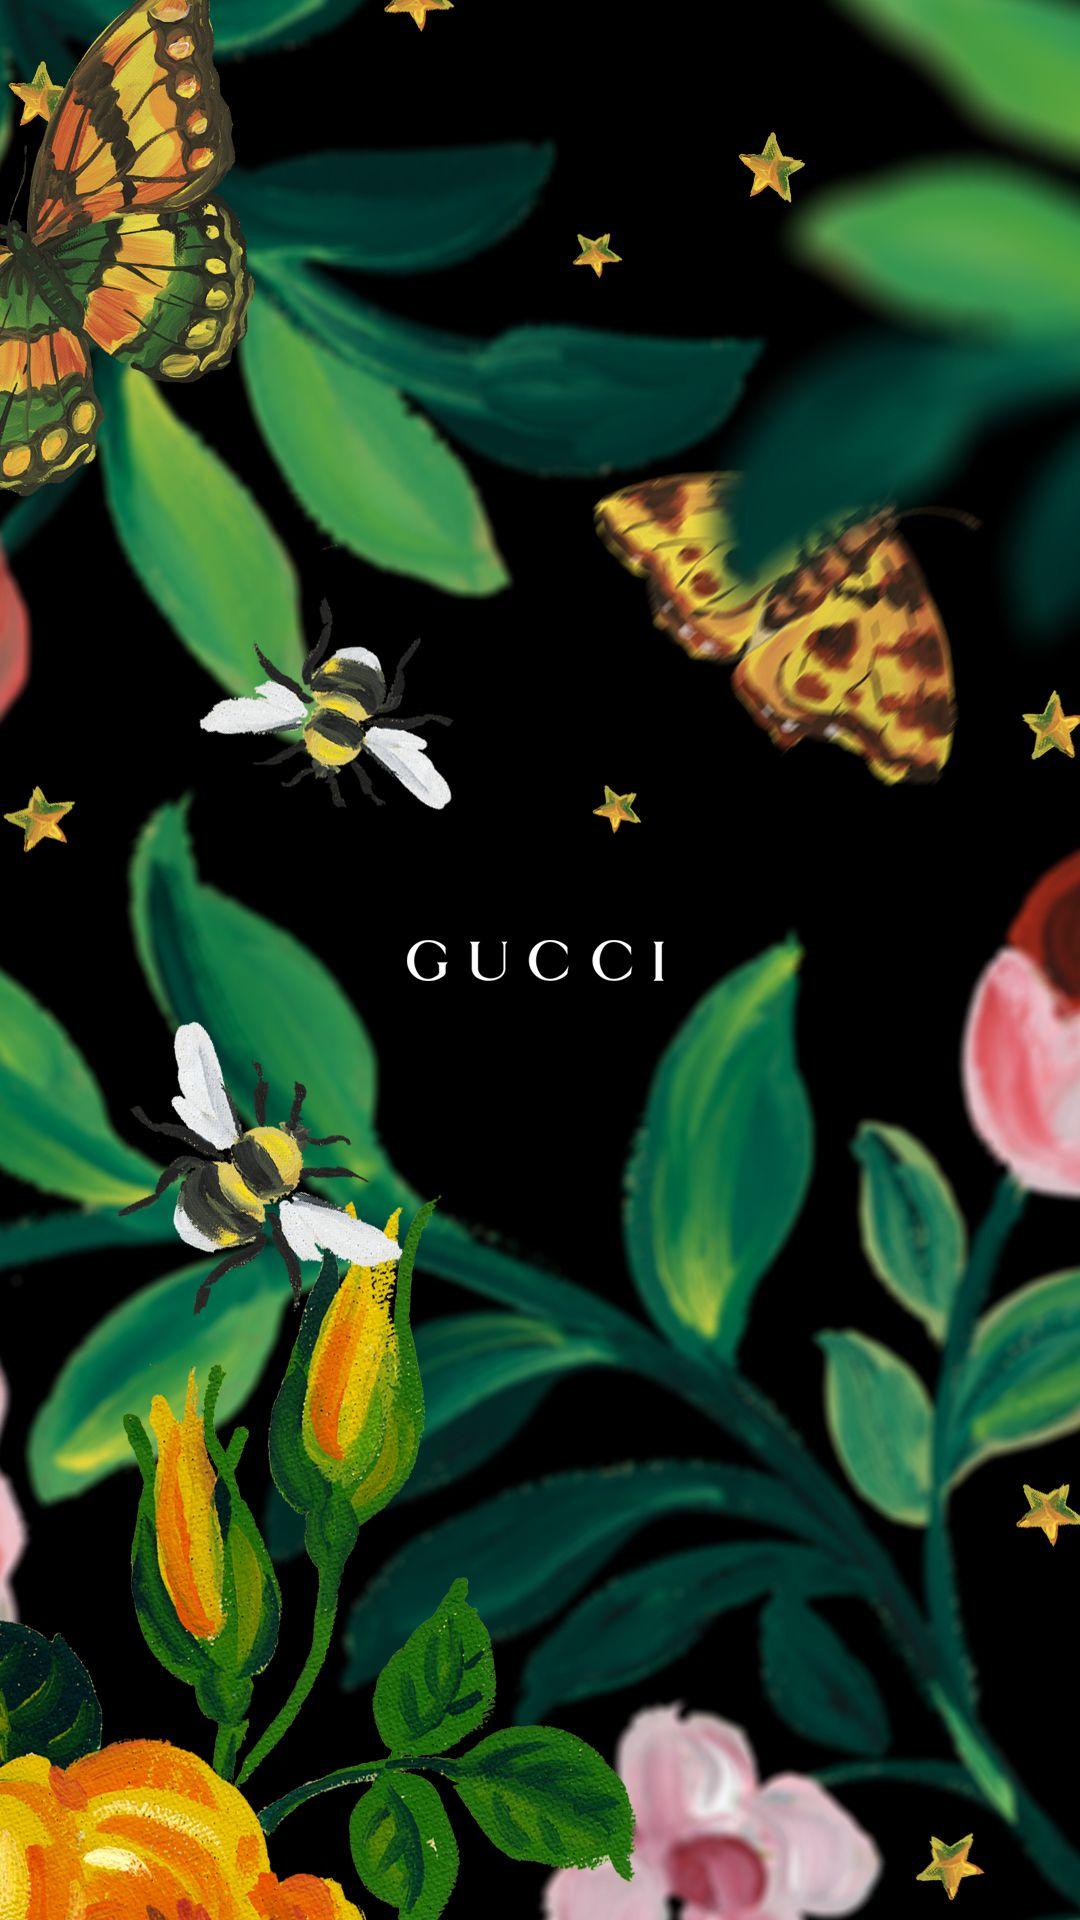 Download 47 Gucci Tiger Wallpaper Iphone Gambar Download - Posts.id